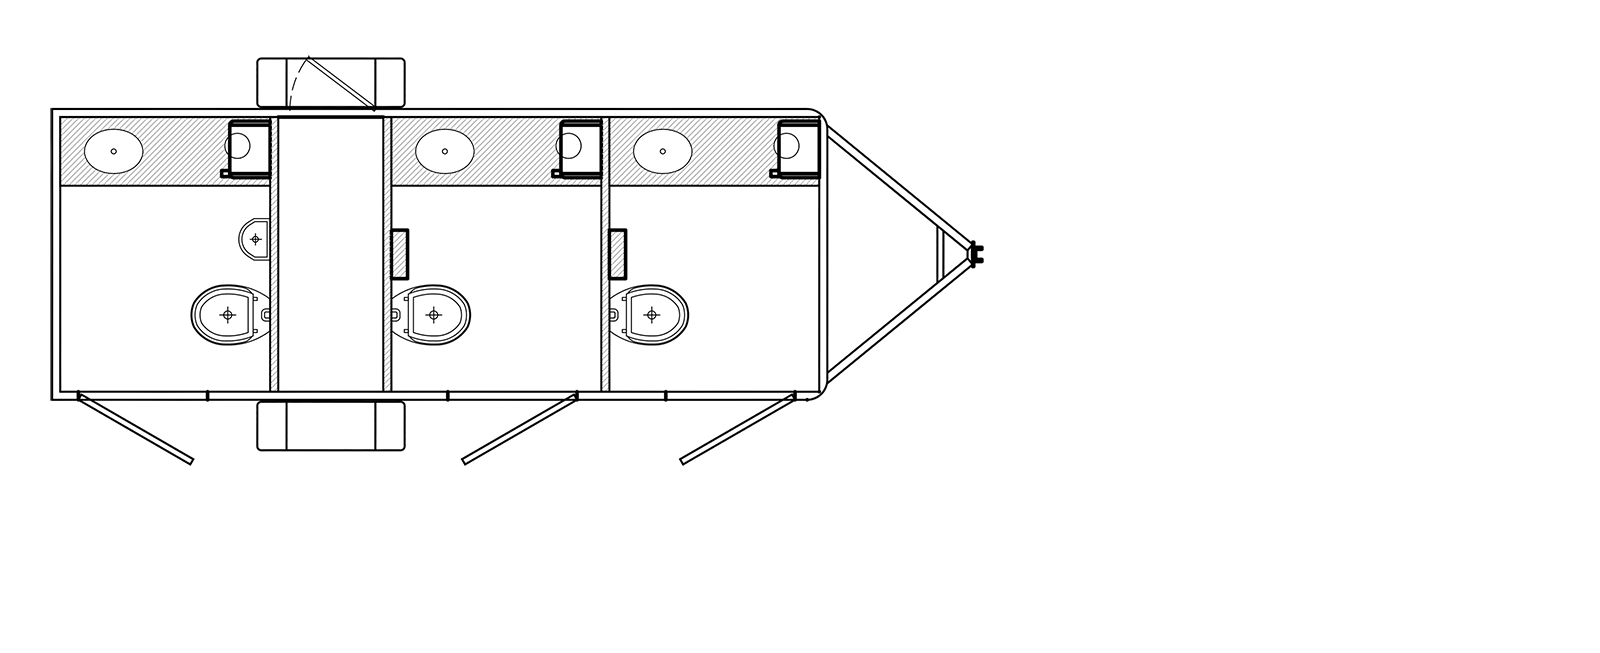 Century Series Century-III floorplan. The Century-III has  slide outs and one entry door.